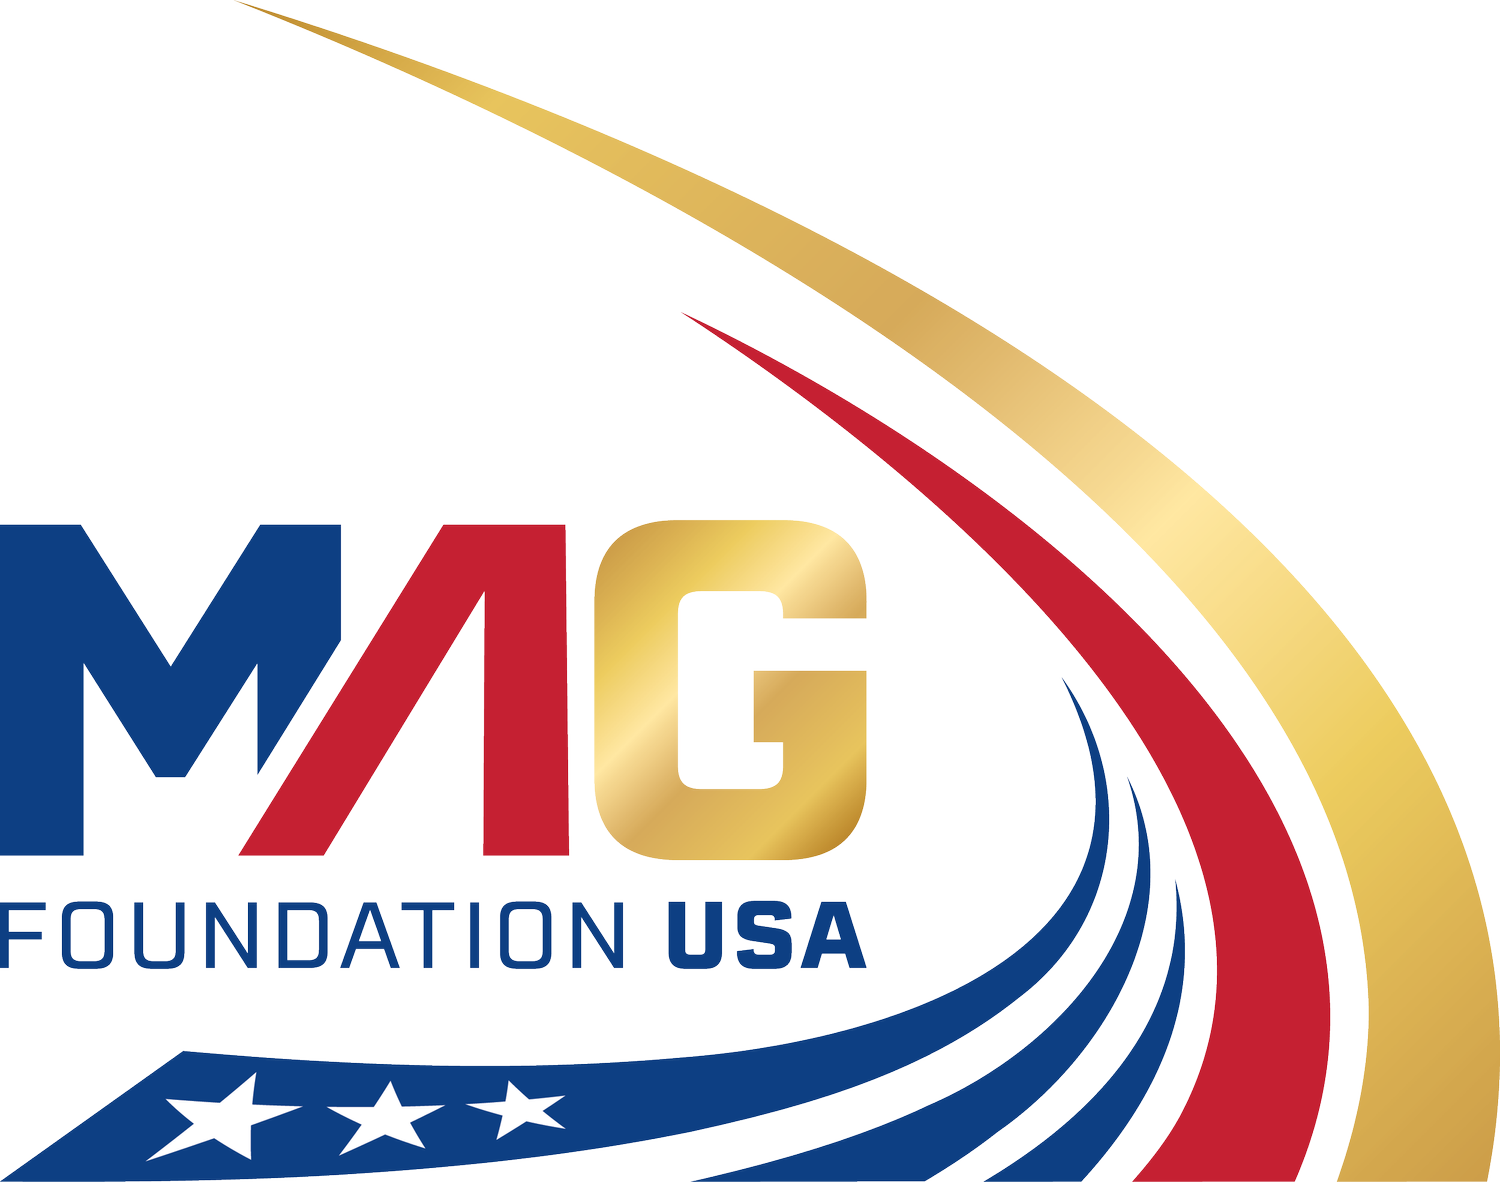 MAG Foundation USA